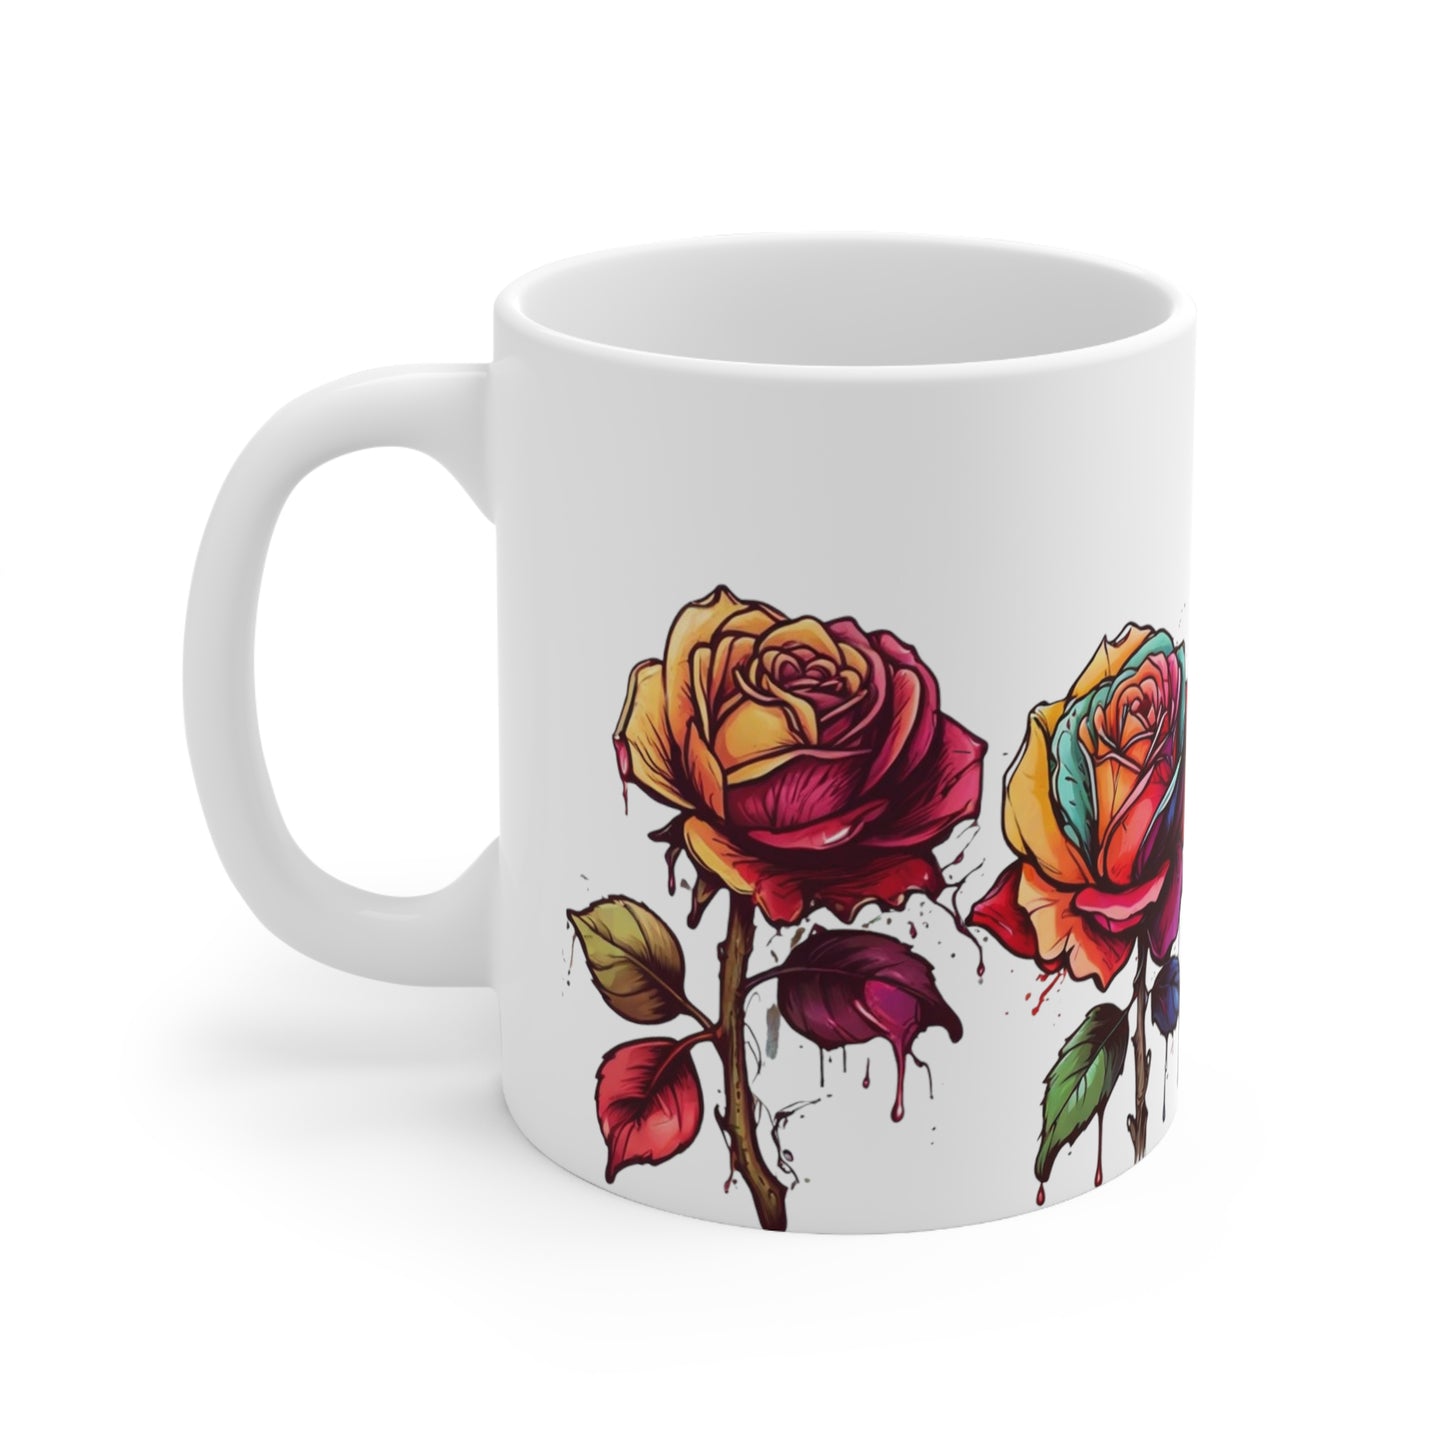 Dying Red Roses Art Mug - Ceramic Coffee Mug 11oz